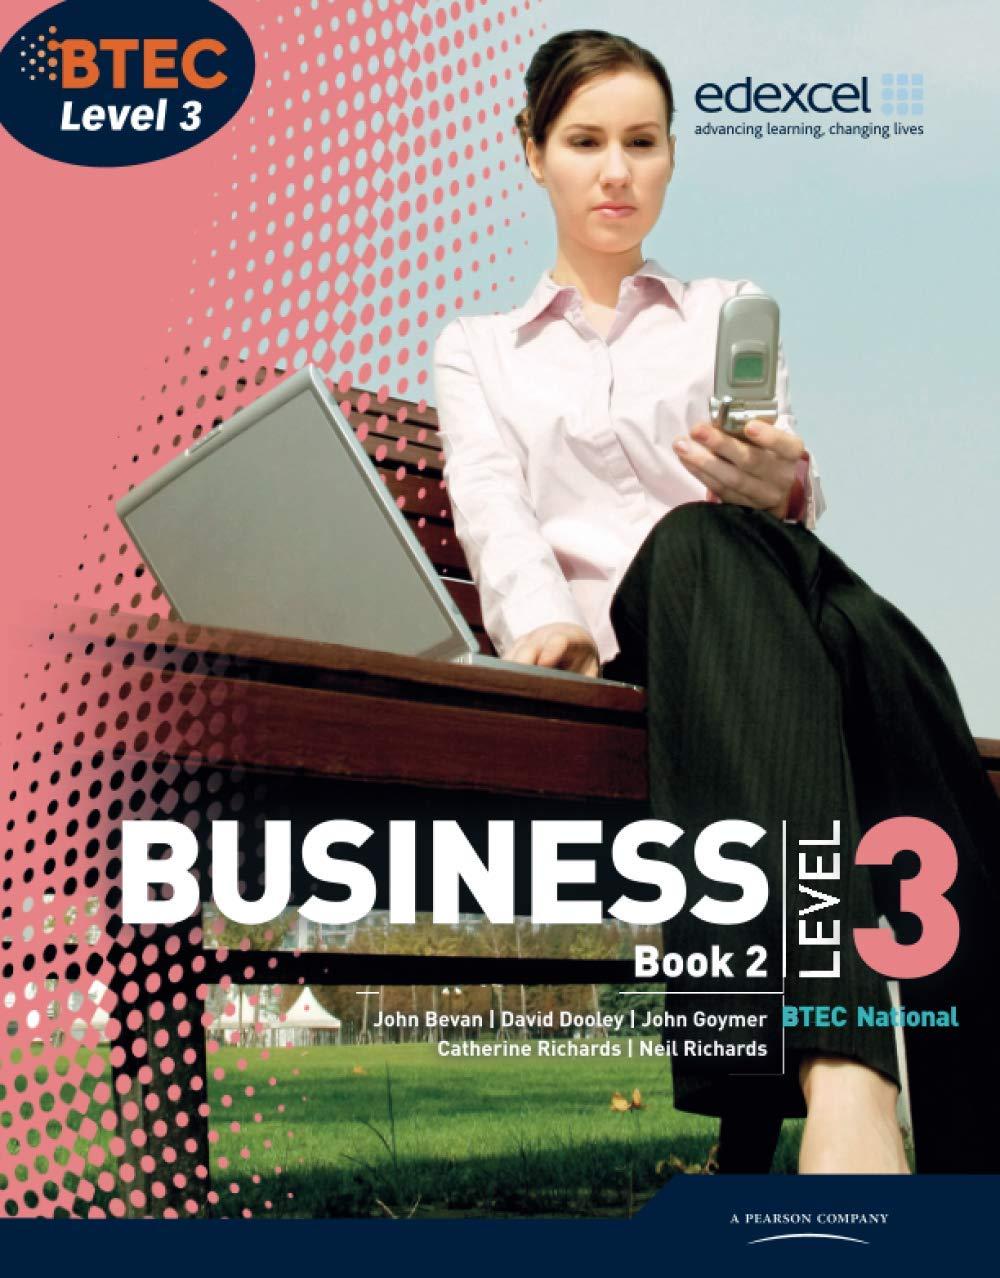 business book 2 btec level 3 3rd edition john bevan, david dooley, catherine richards, neil richards